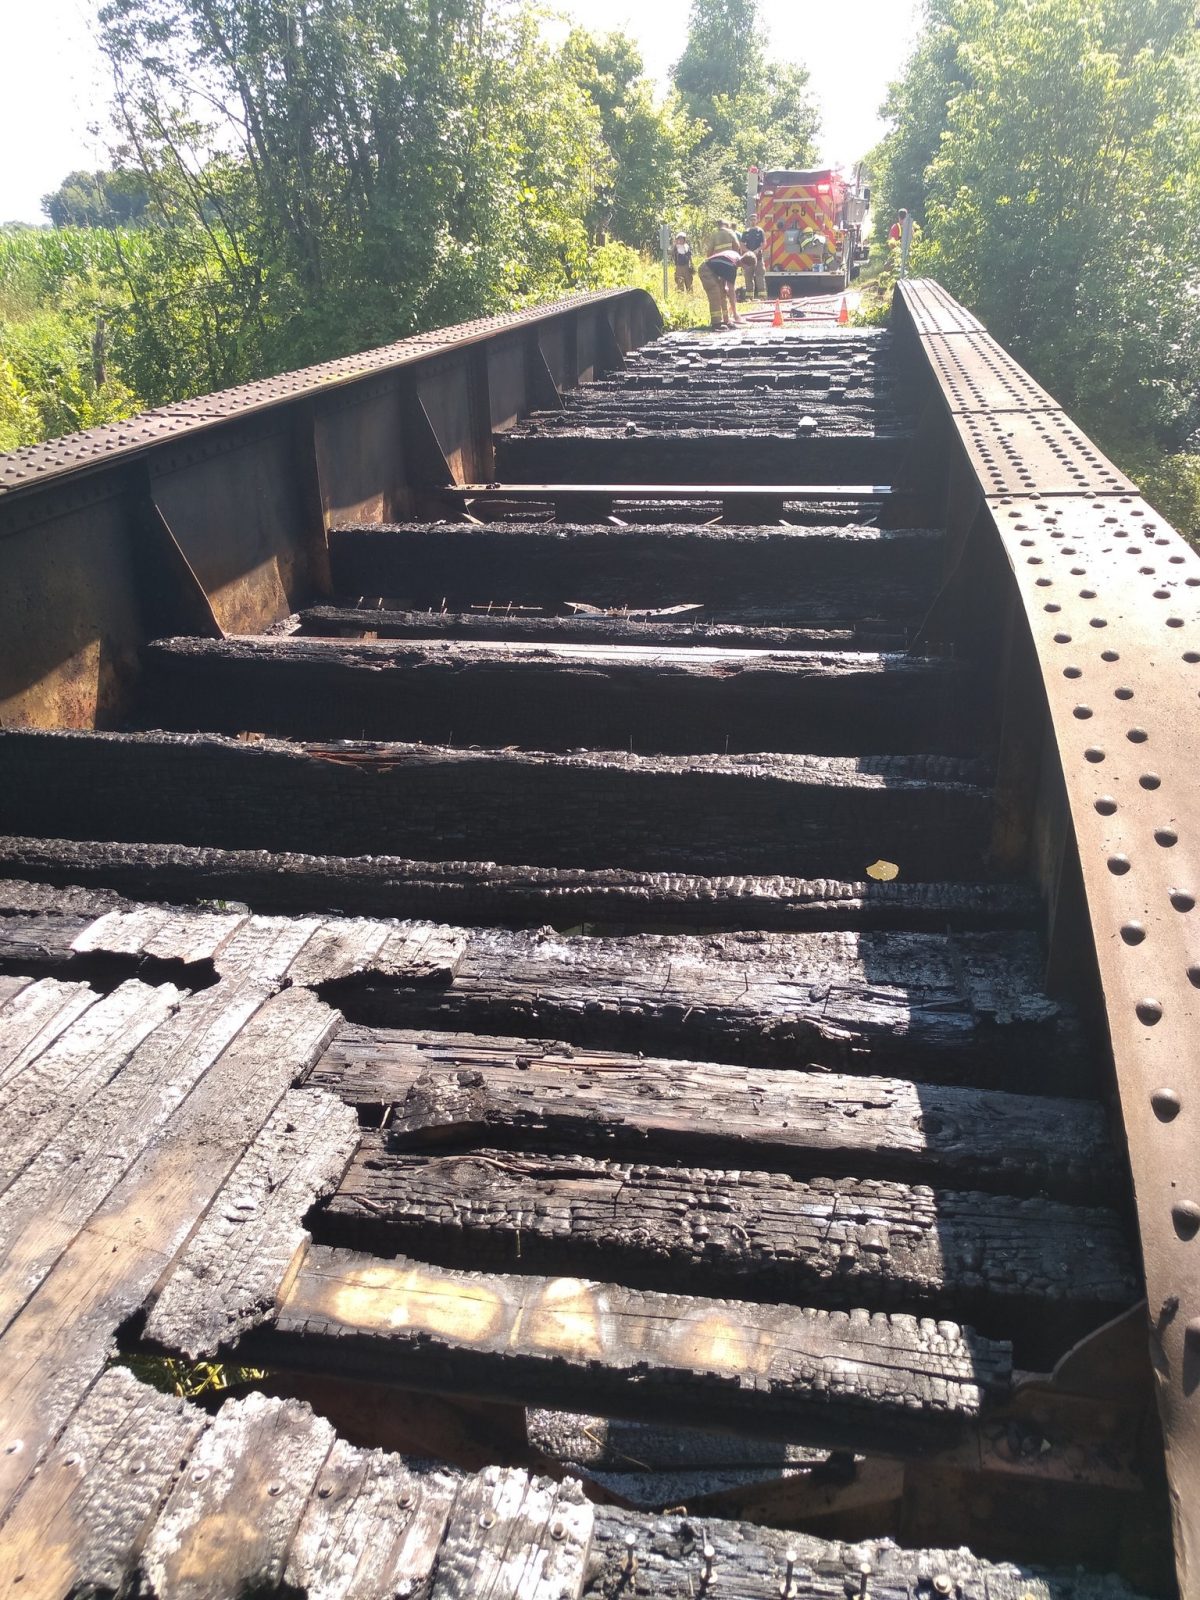 Fire closes Peanut Line railway bridge